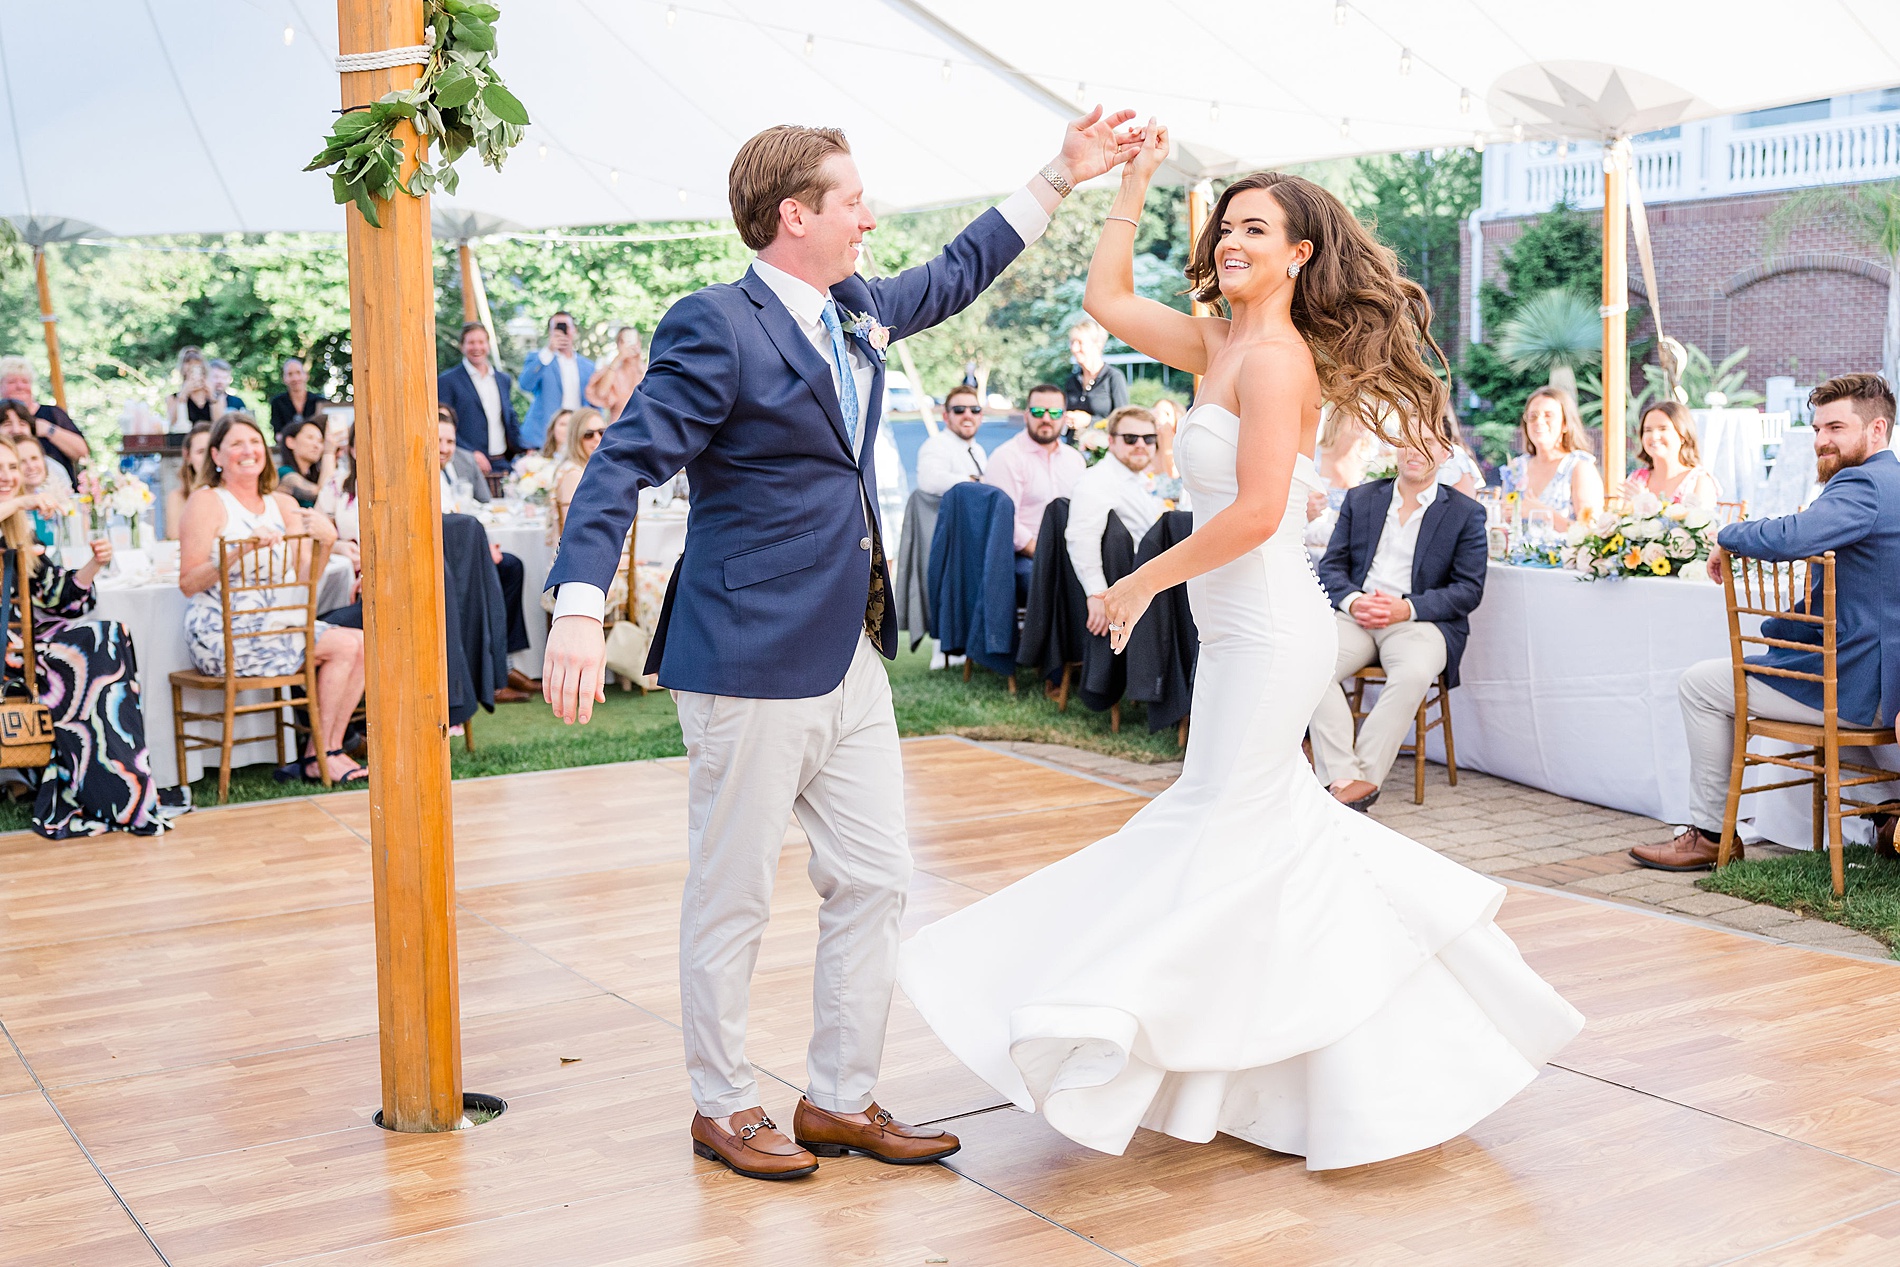 newlyweds dance at chic garden wedding reception